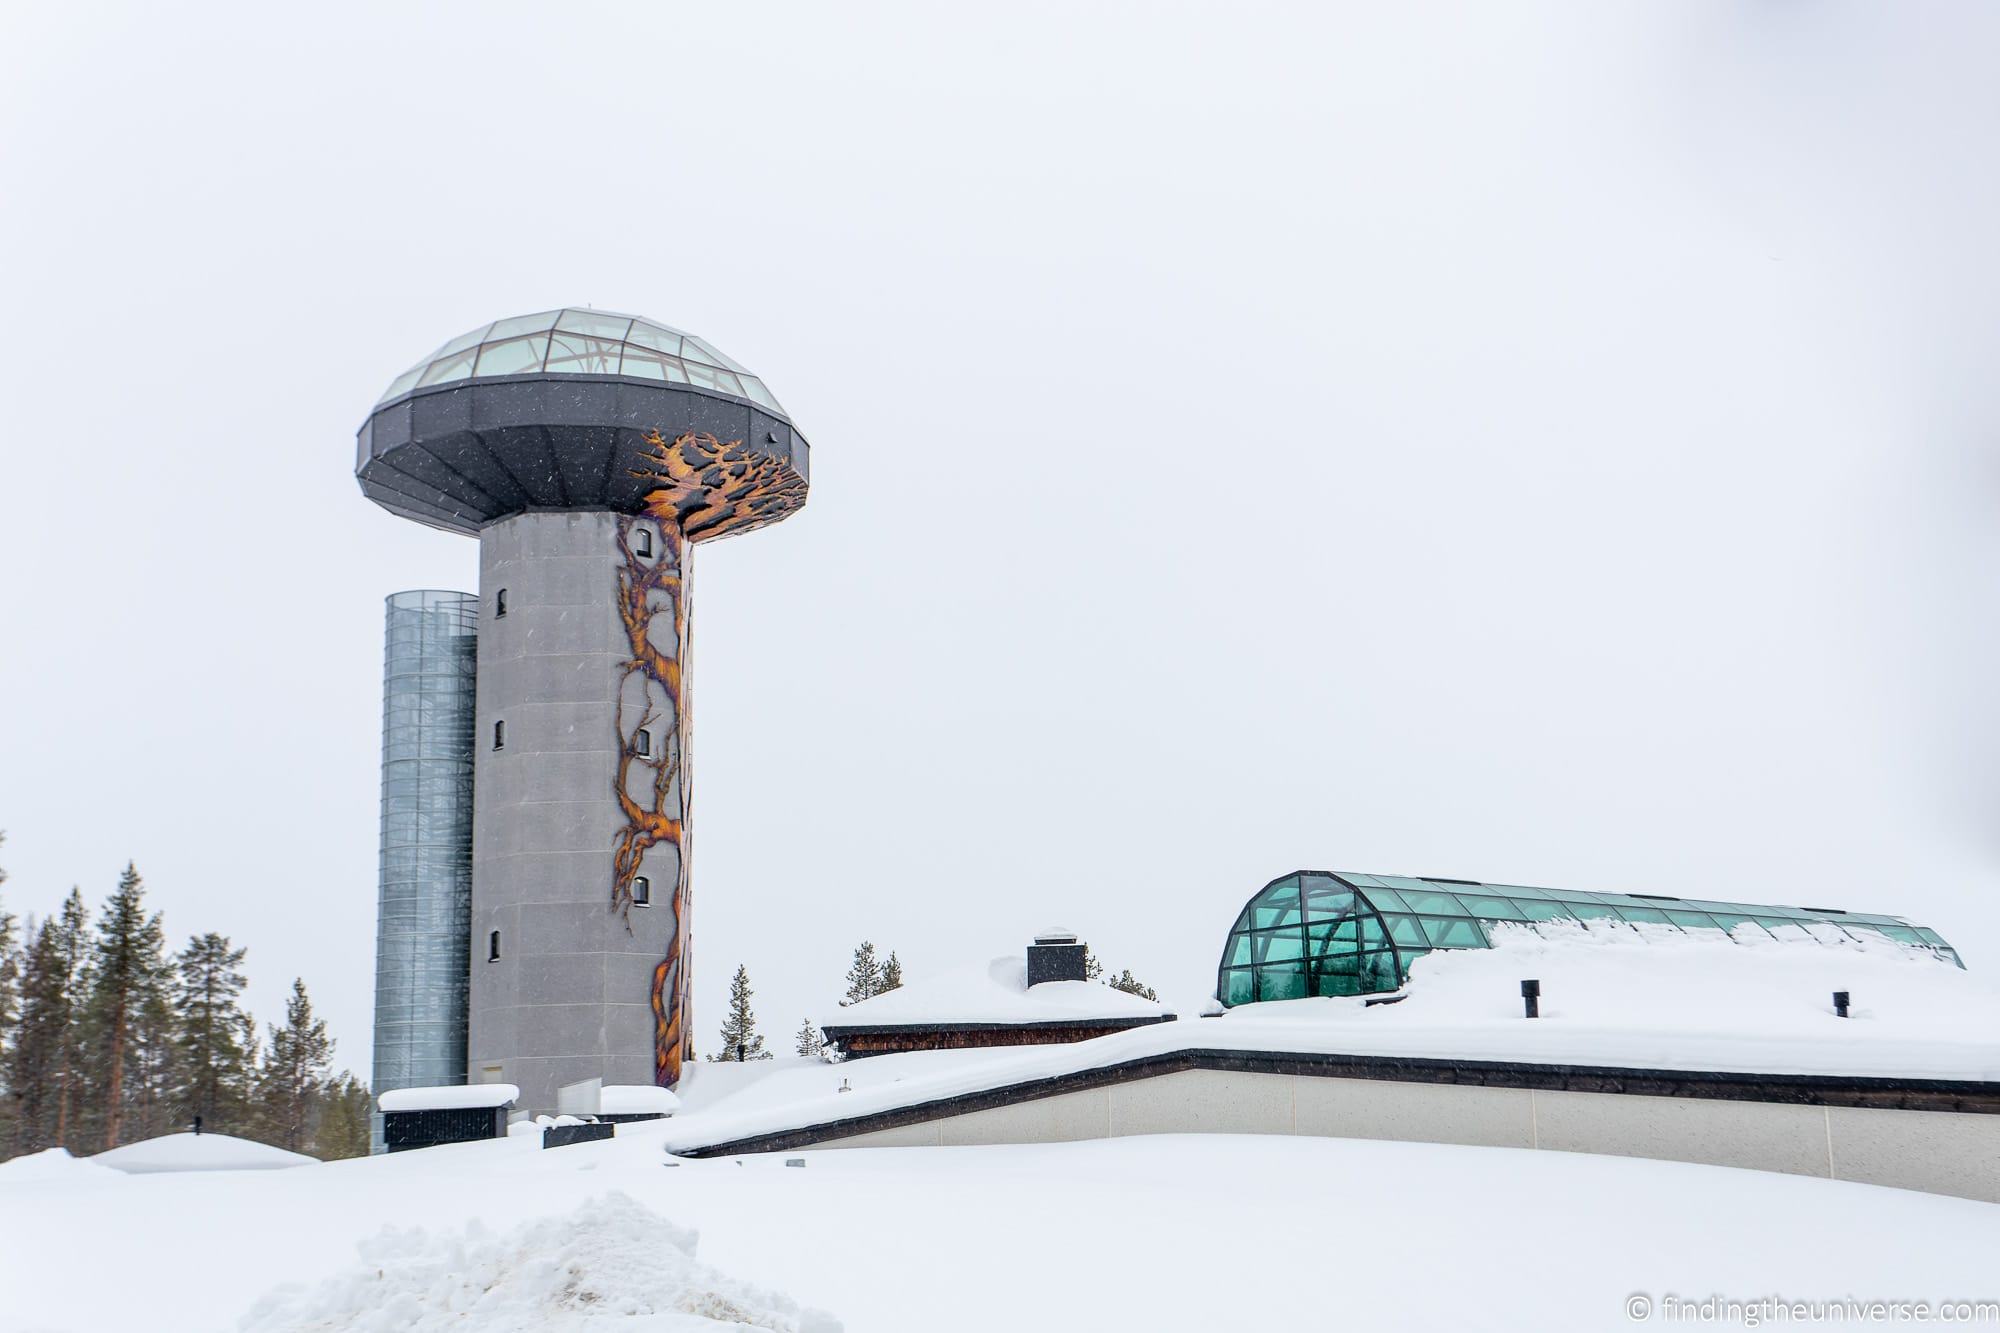 Kakslauttanen Arctic Resort - observation tower